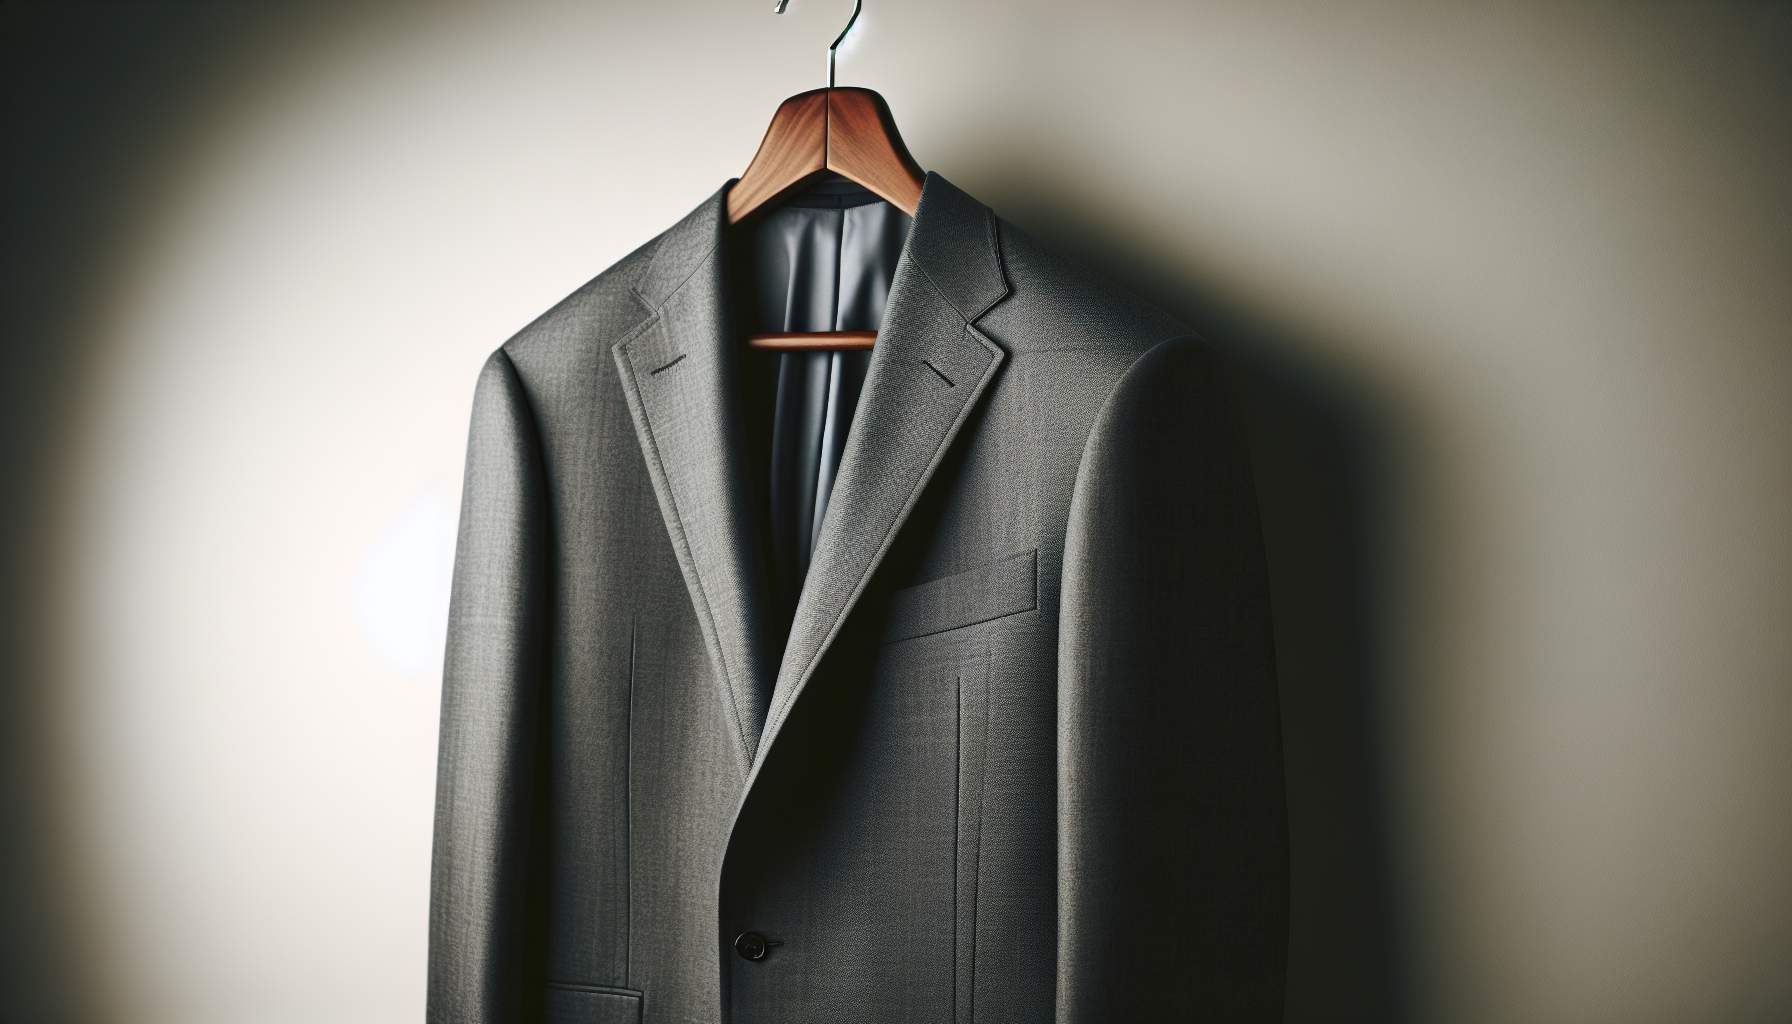 Veste costume grise homme: comment adopter un style formel tendance